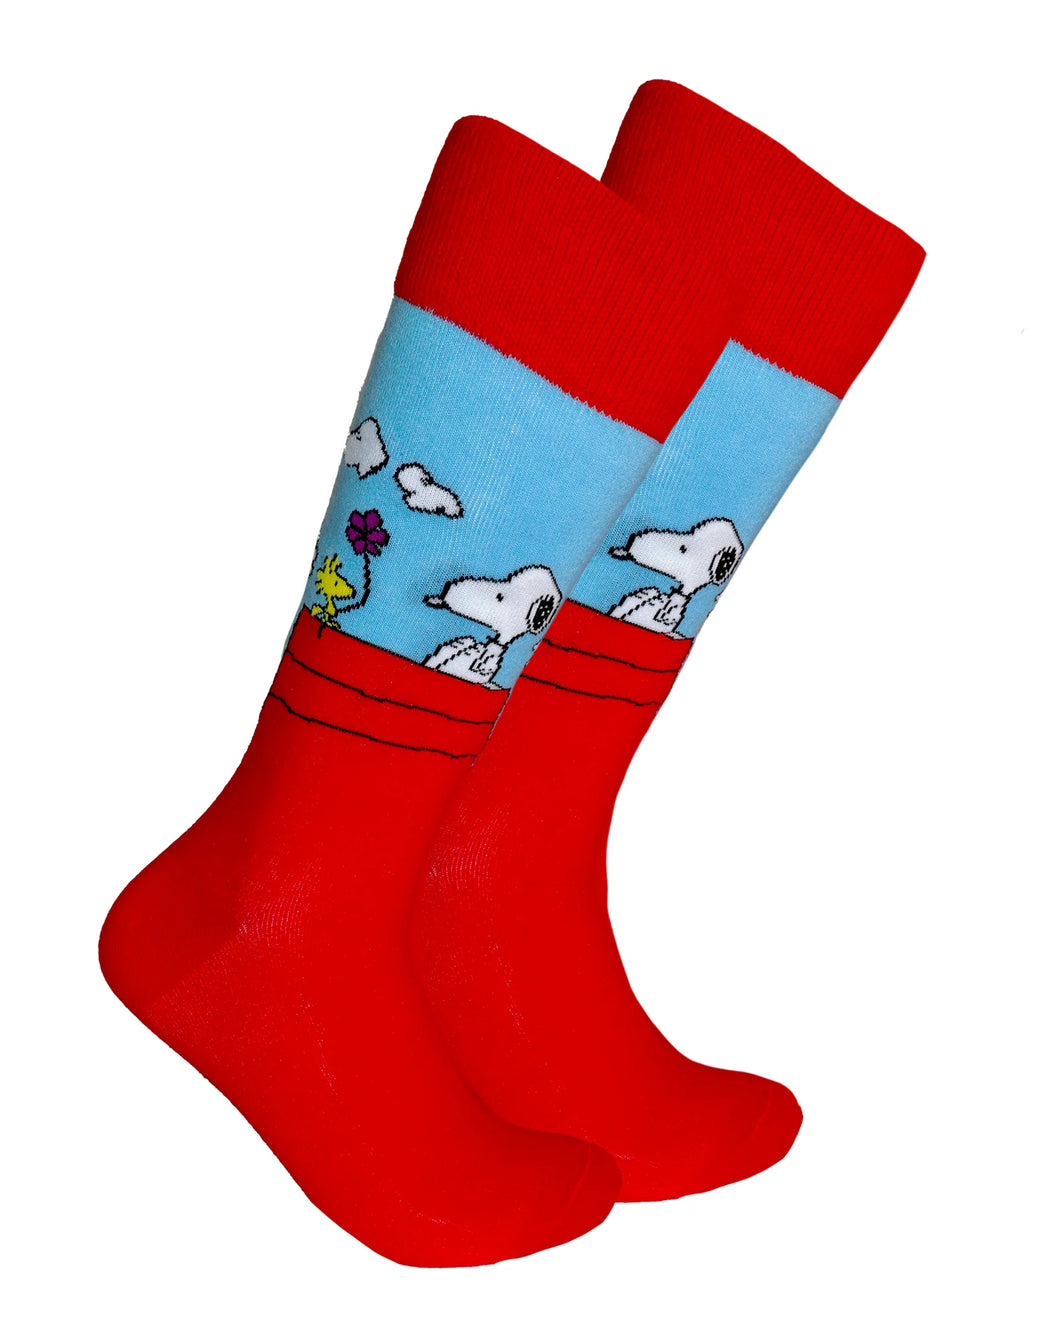 Snoopy & Woodstock Socks by Soctopus